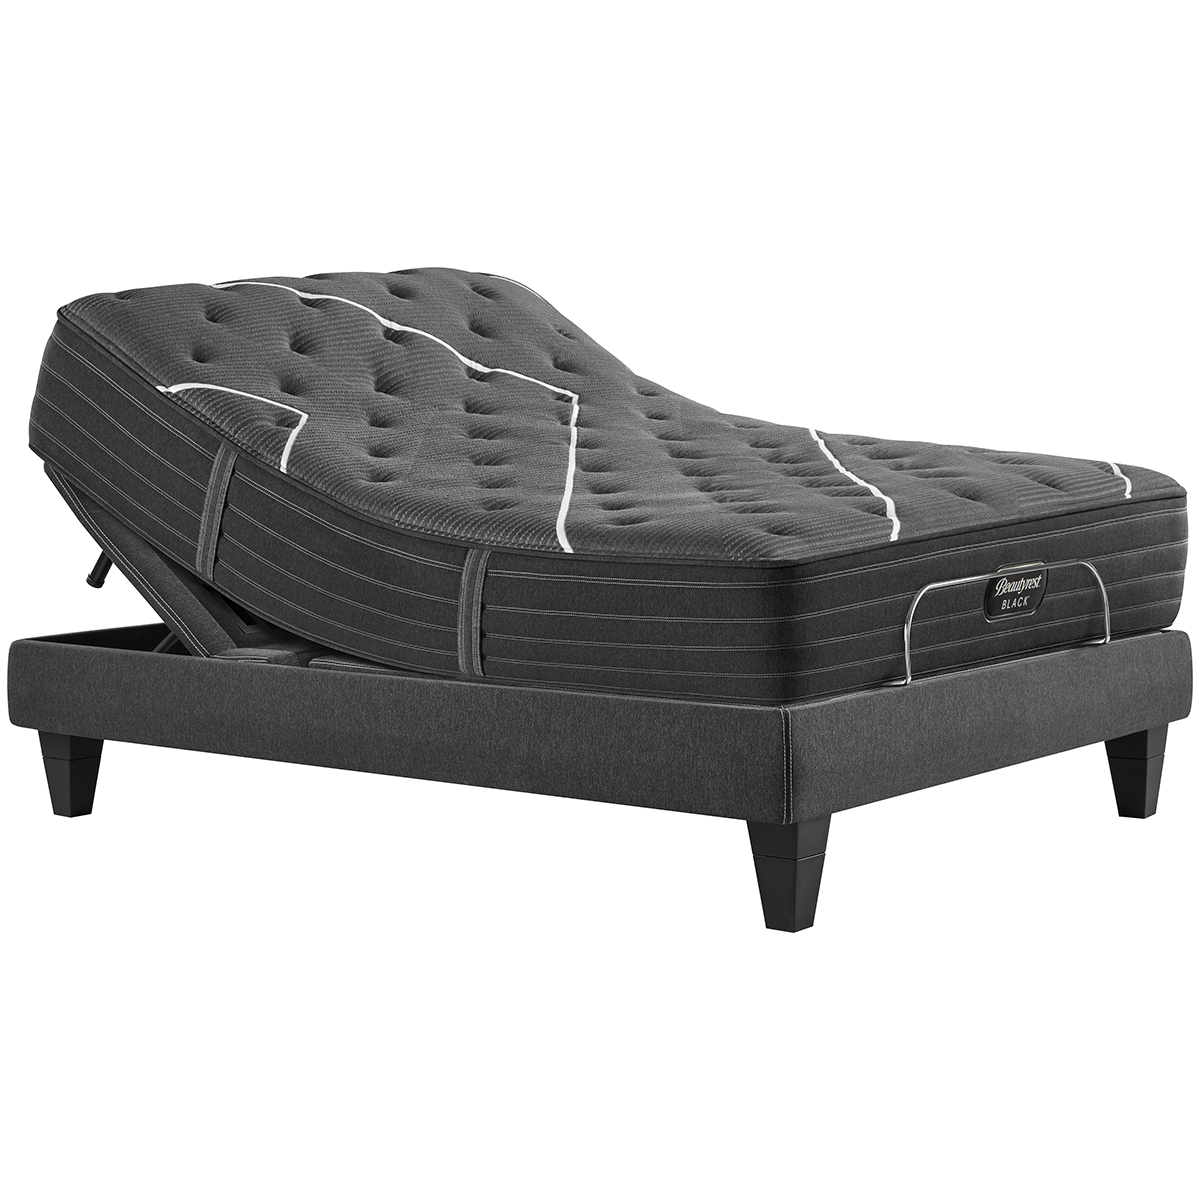 Beautyrest(R) Black Luxury Adjustable Base